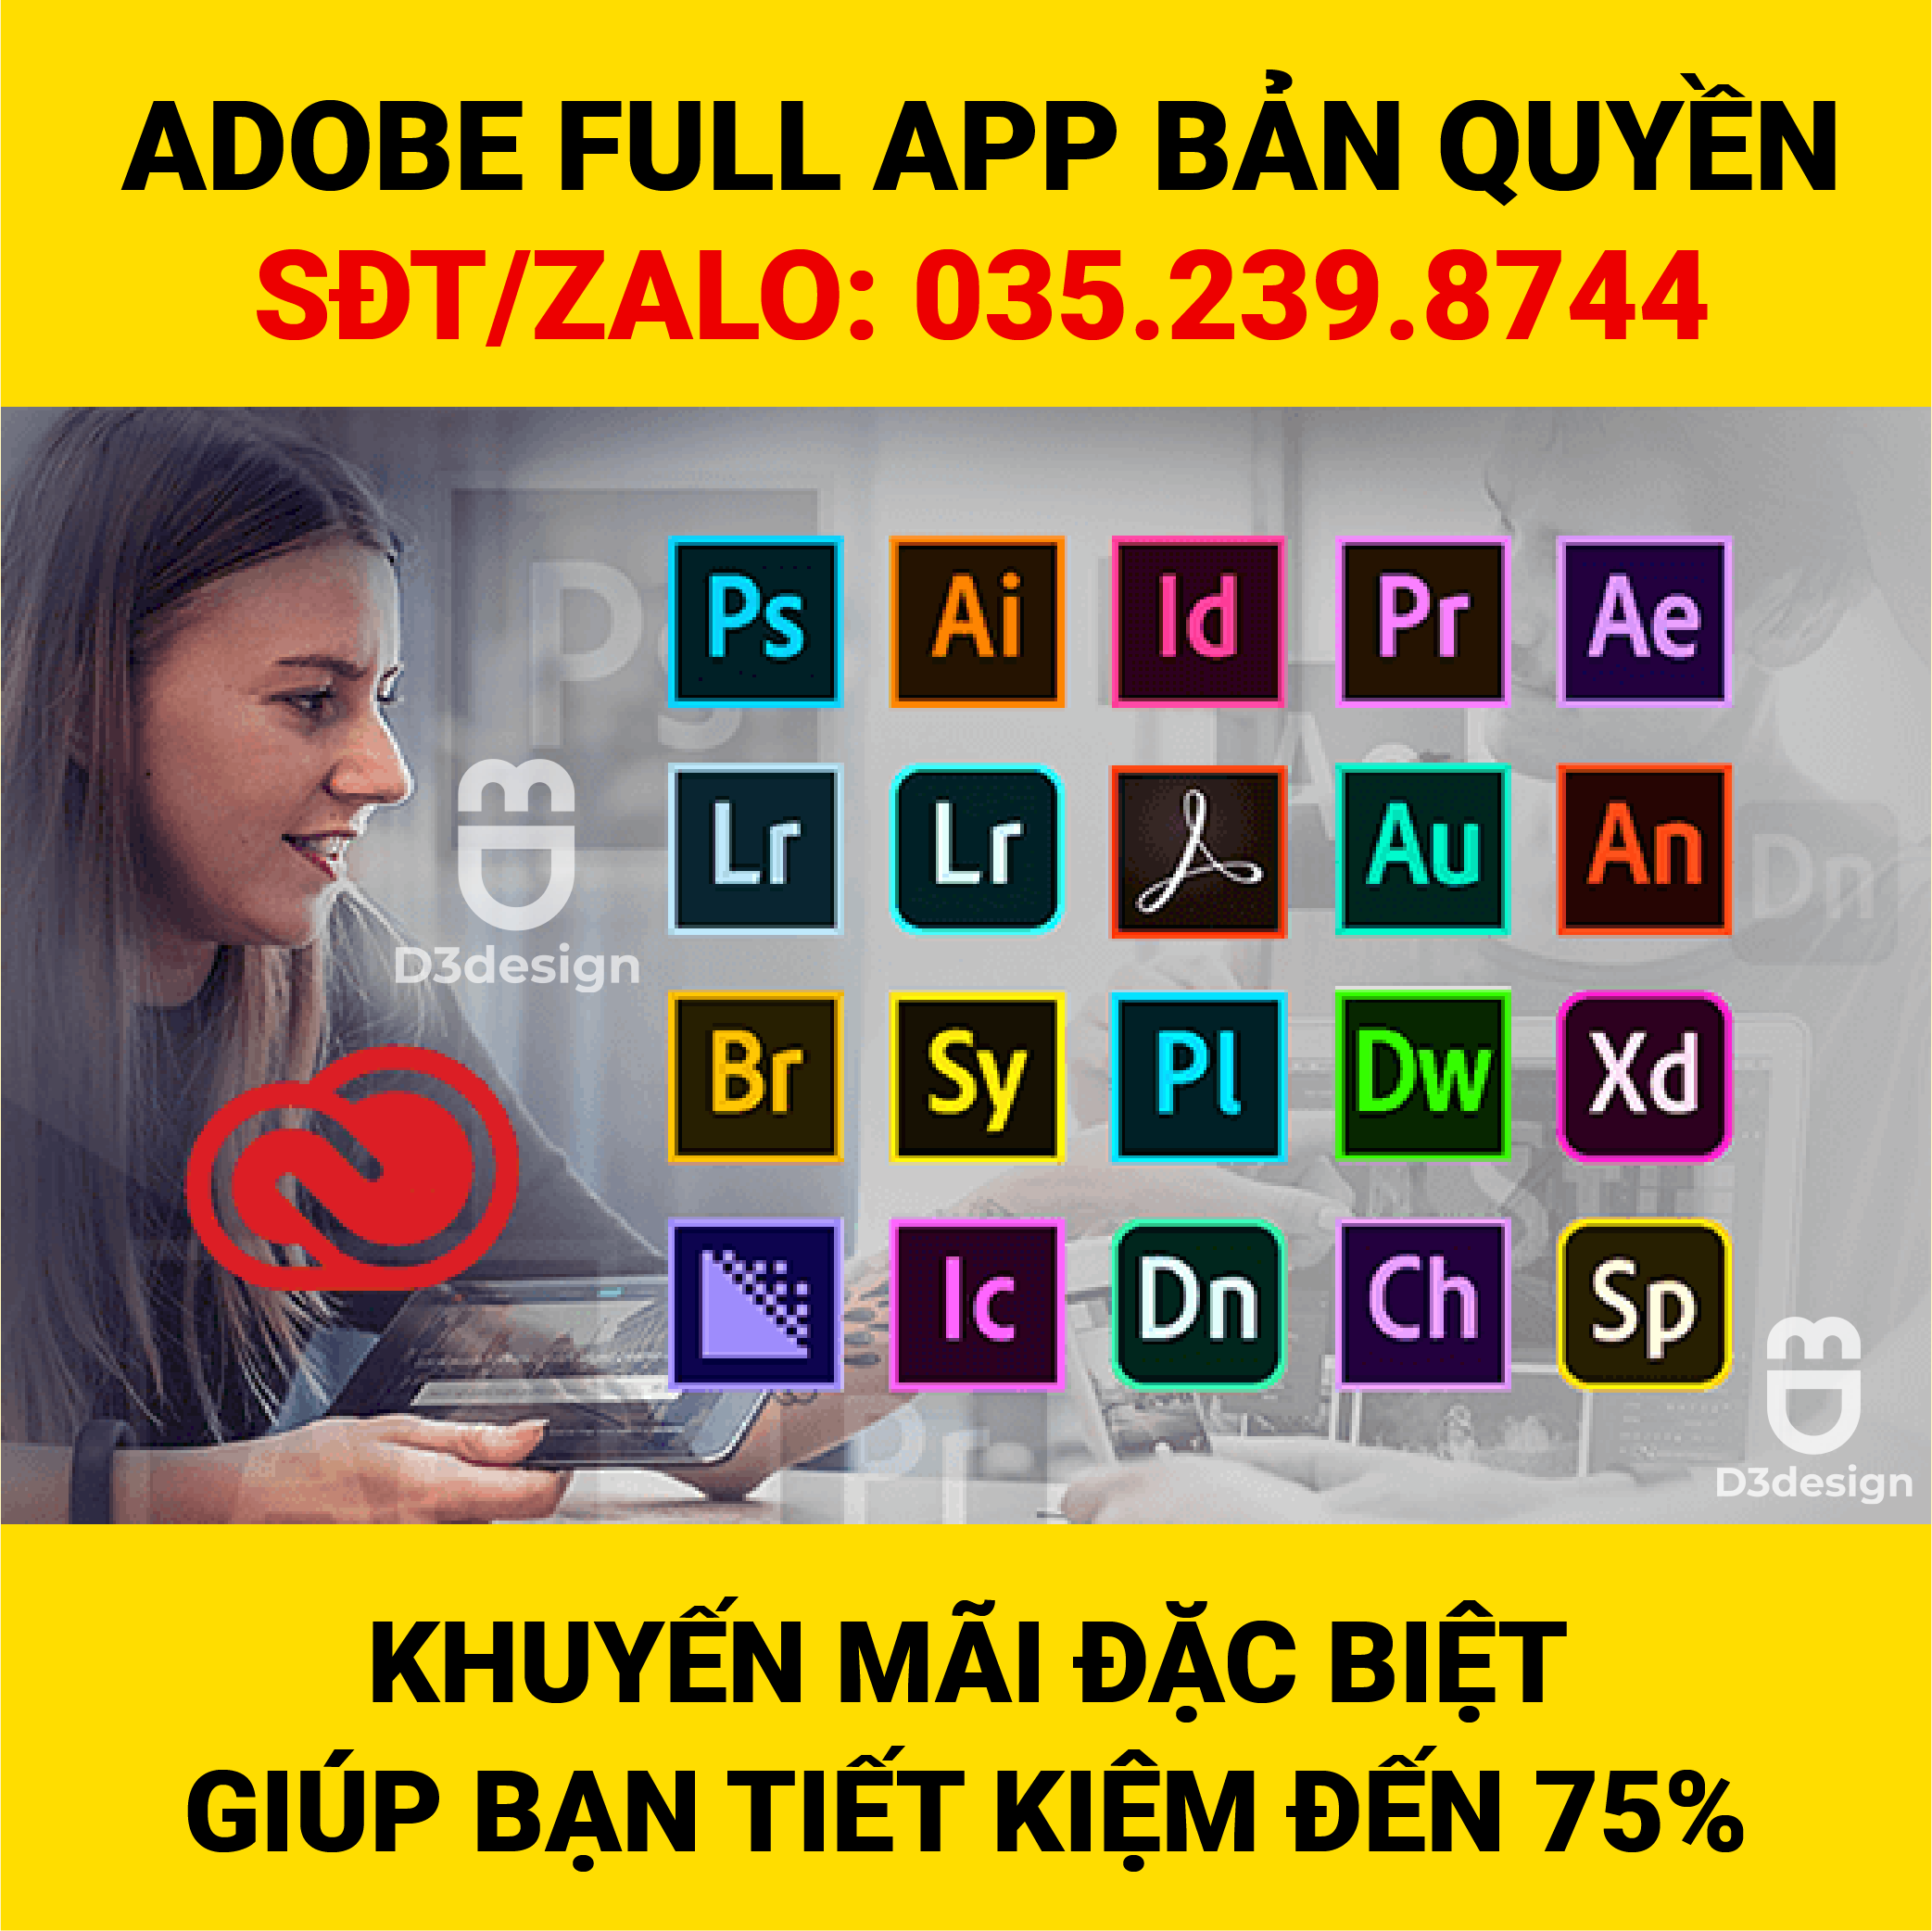  Mua Adobe Bản Quyền Full App Giá Rẻ (-75%)